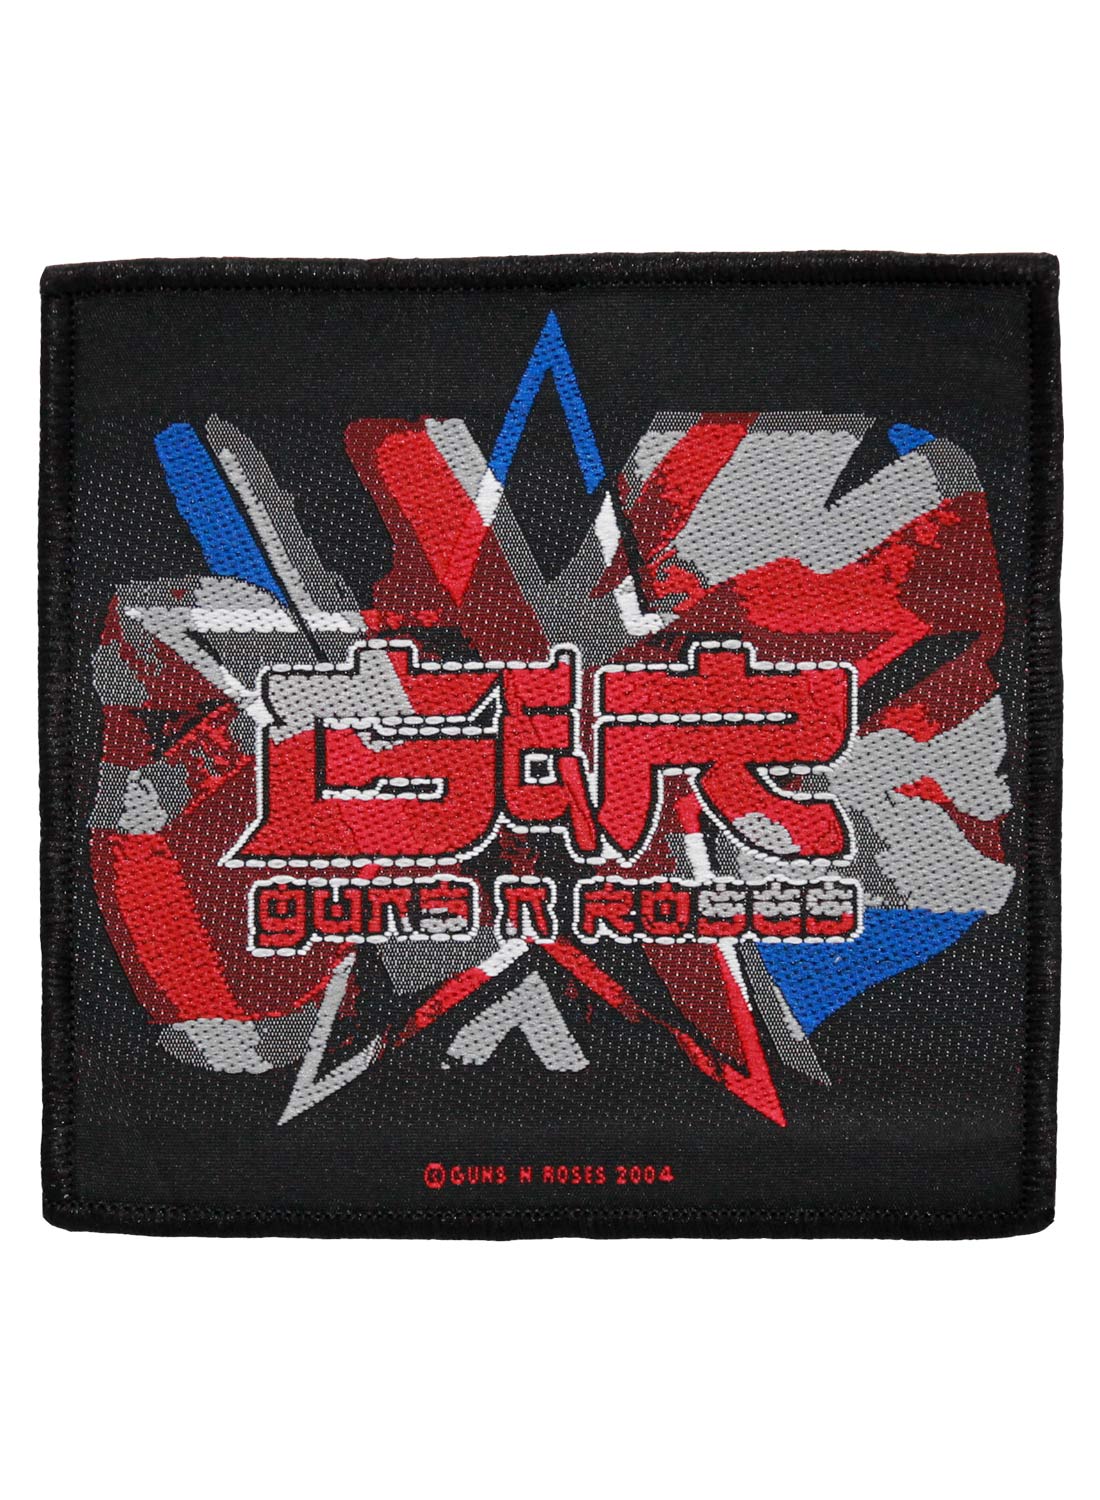 Guns N' Roses Union Jack Patch